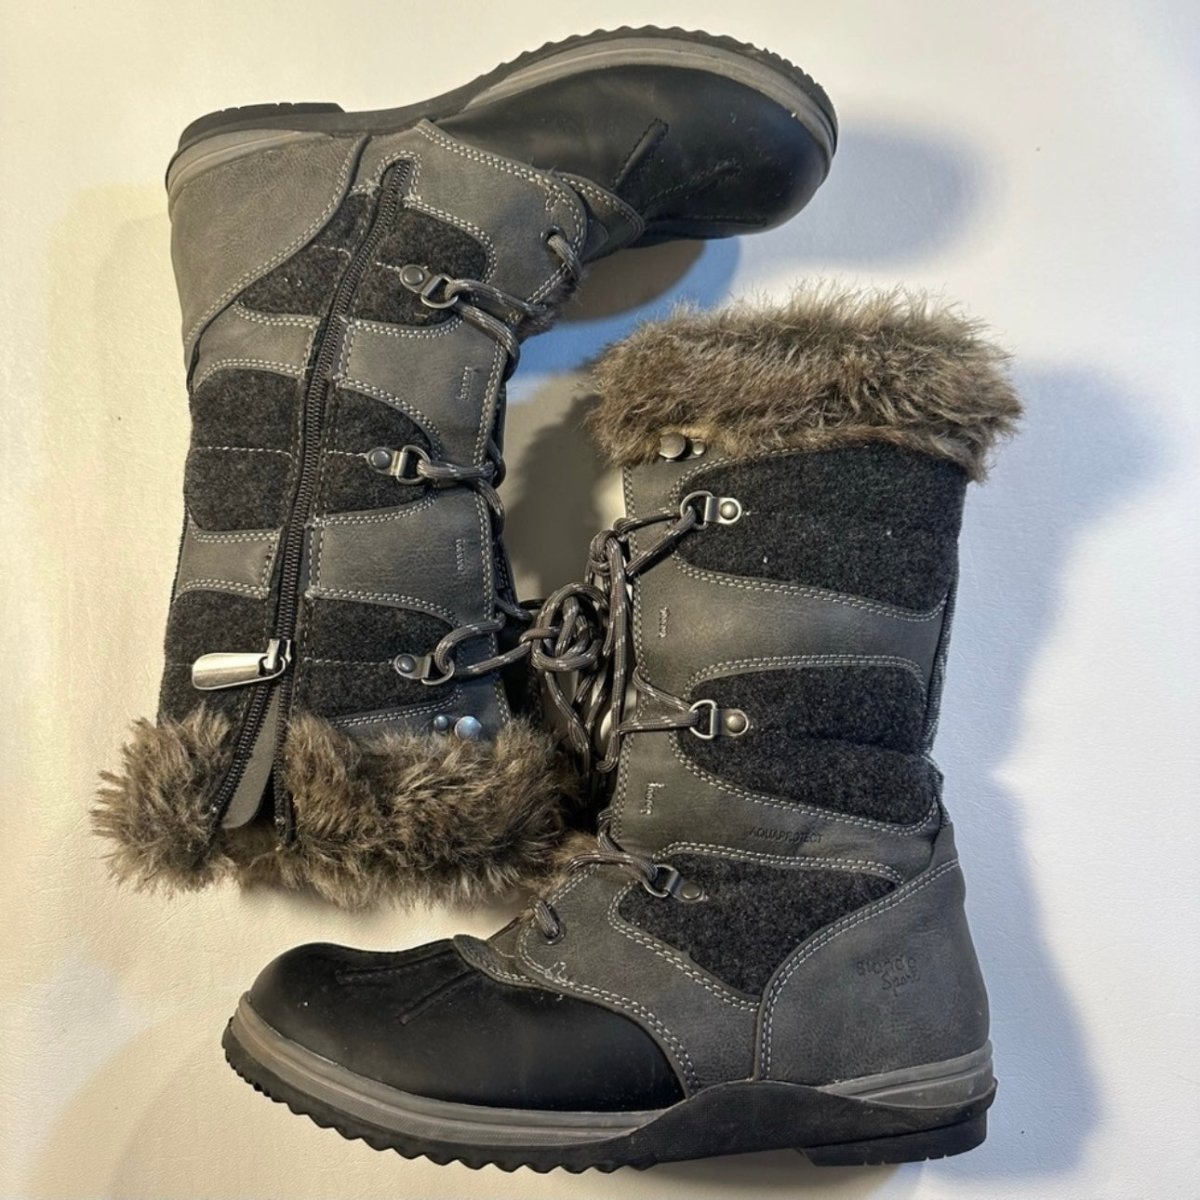 Blondo Sport - Blondo Sport Sz 9 Sasha Gray Waterproof AguaProtect Faux Fur Leather Snow Boots - Shoes - Afterglow Market